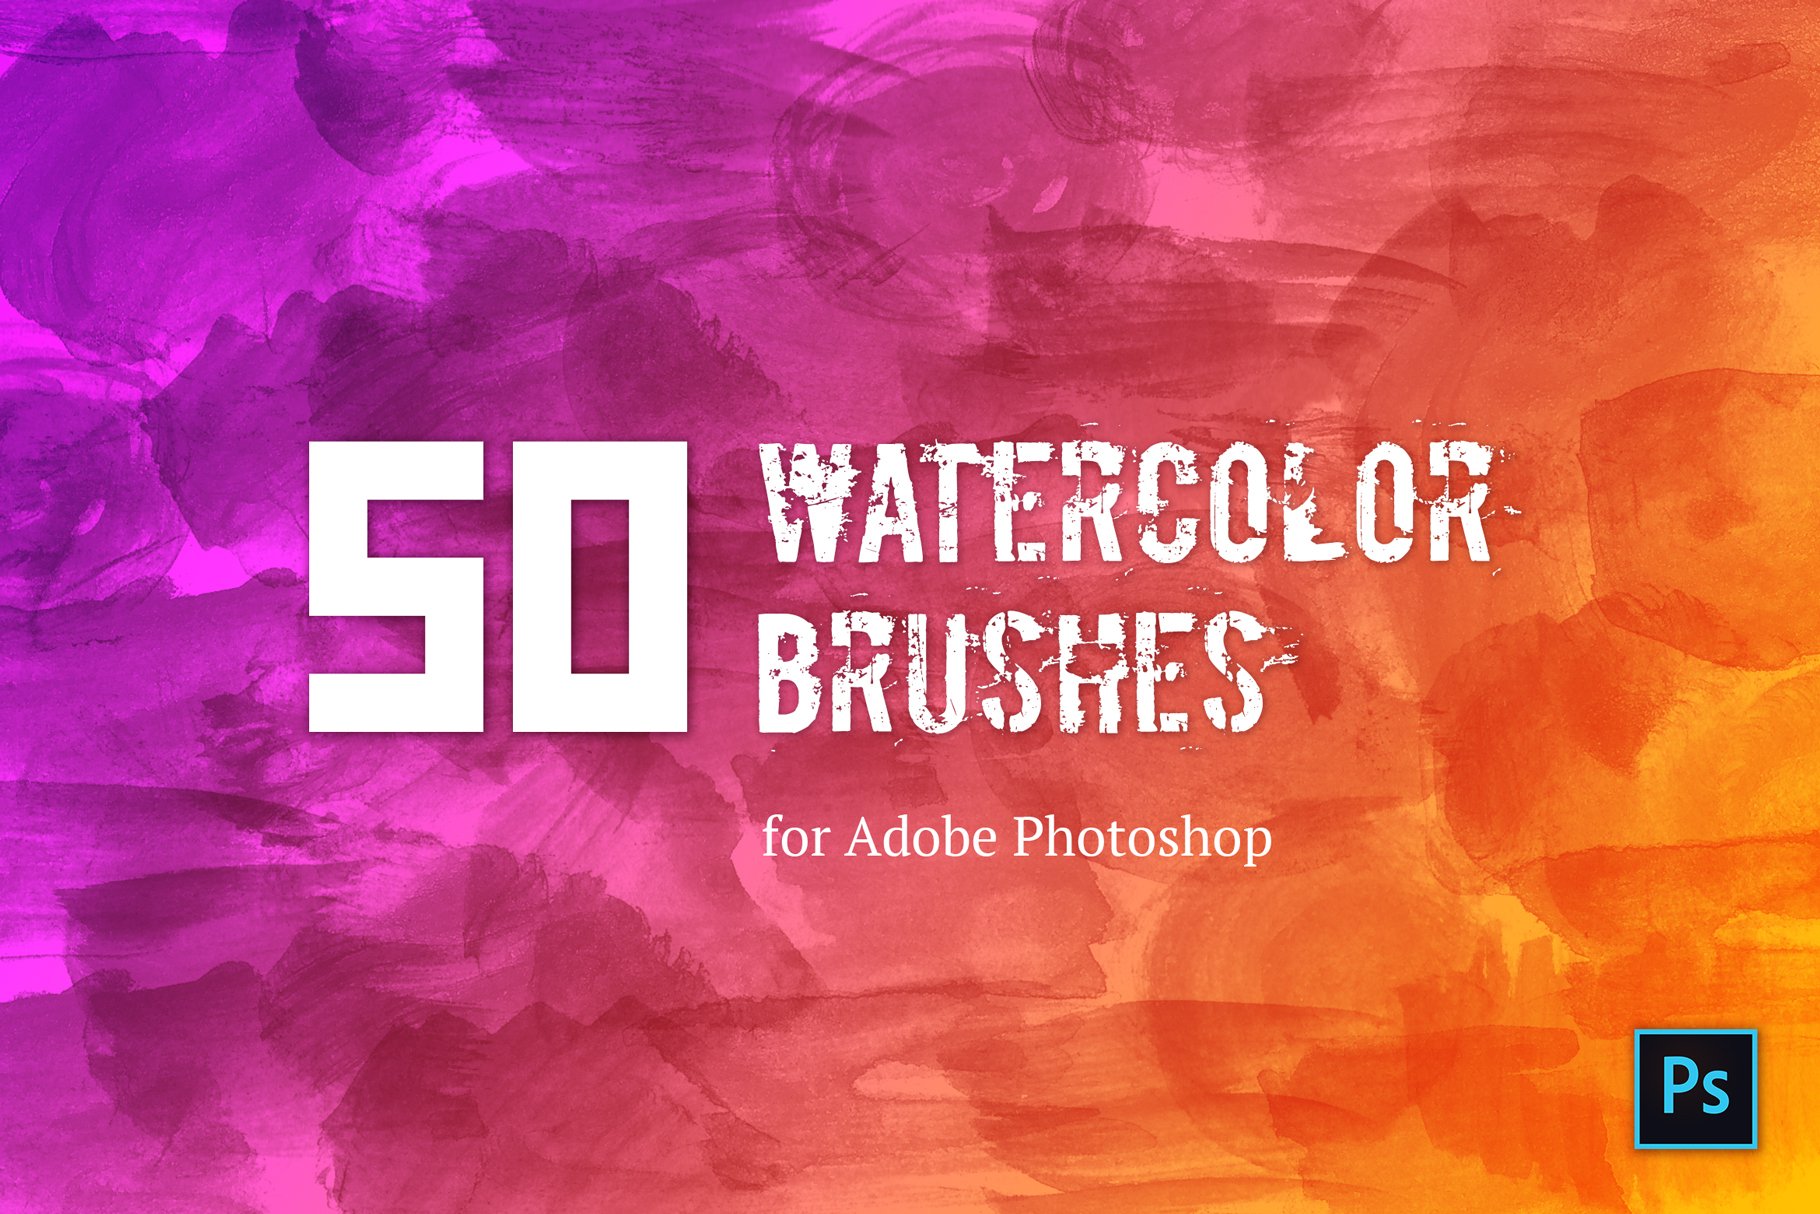 Watercolor Brush Set #1cover image.